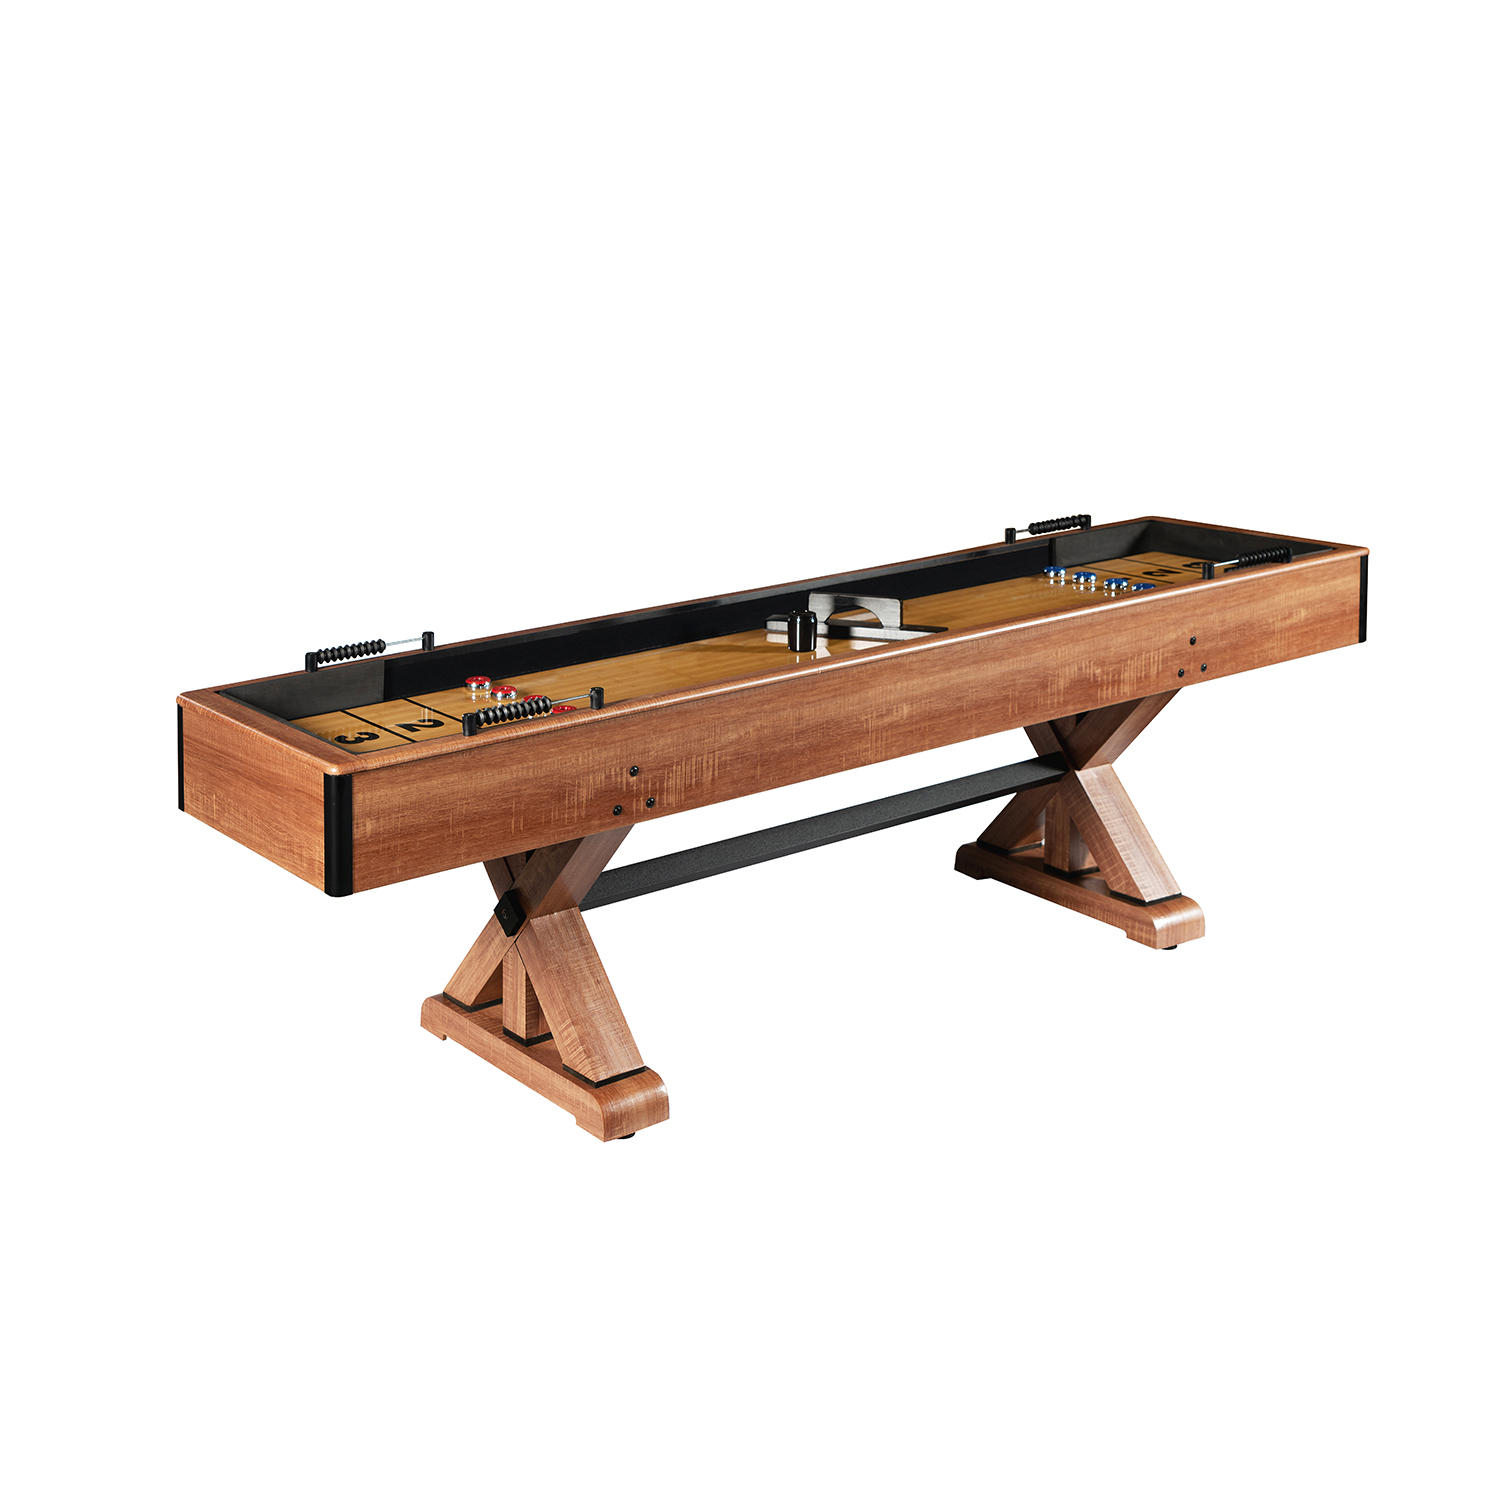 Daulton 9′ Shuffleboard Table